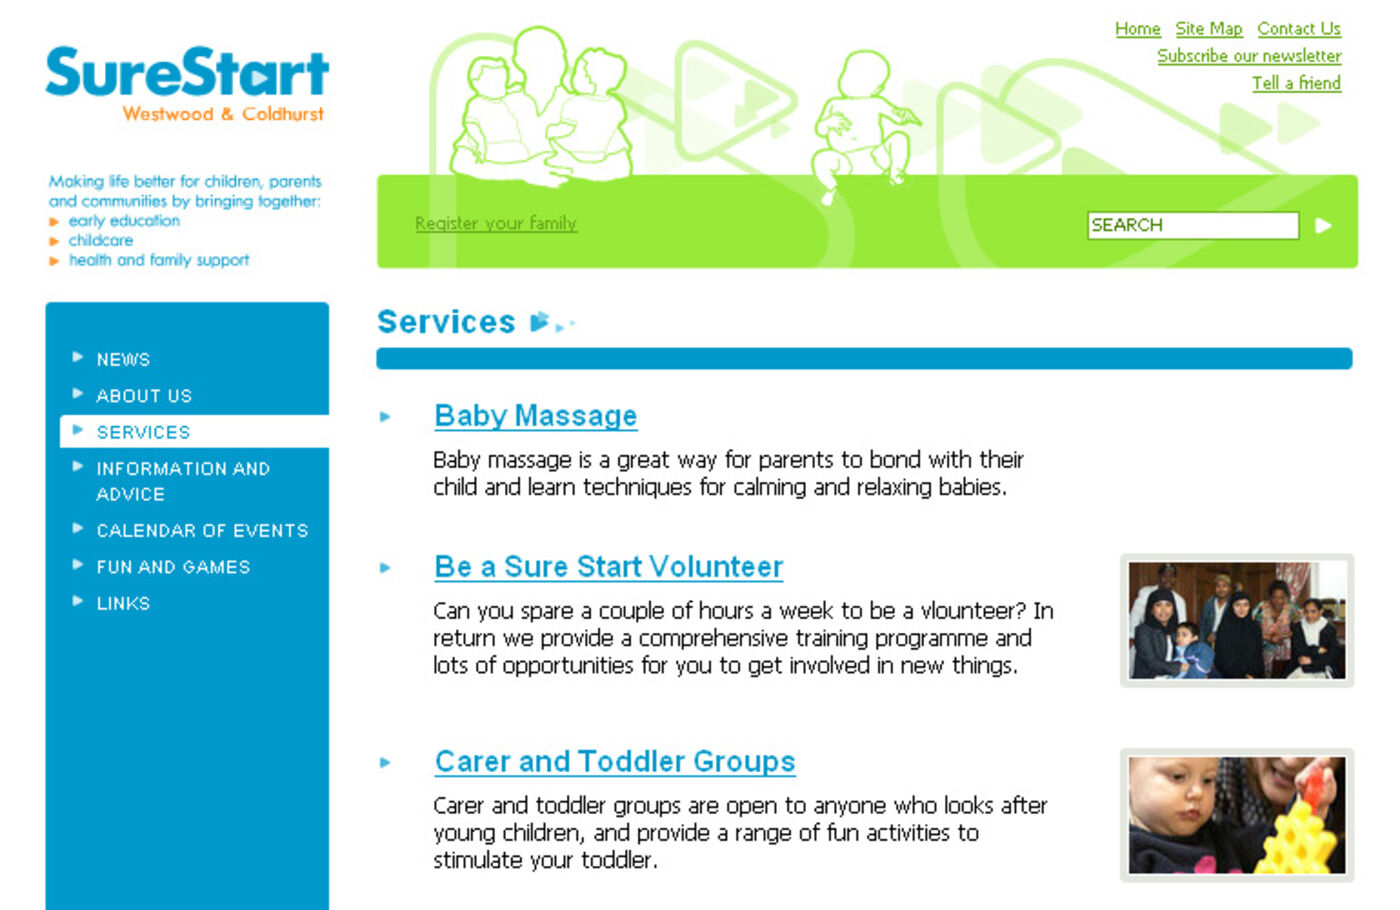 Sure Start Westwood & Coldhurst Services - SureStart